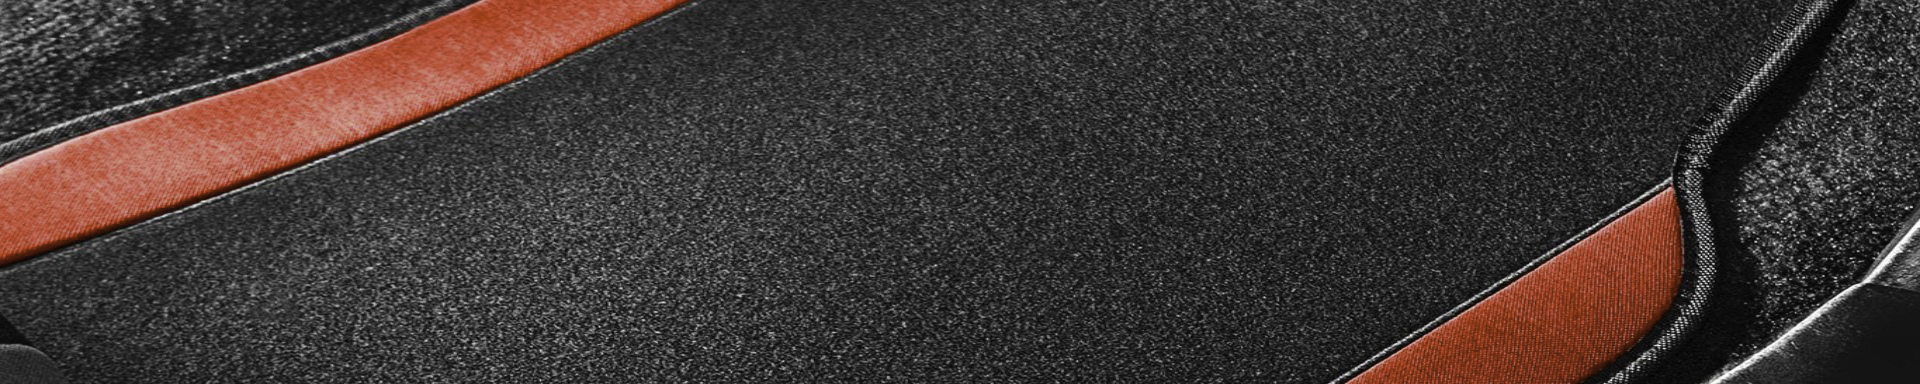 Carpet Mats | GarageAndFab.com | Munro Industries gf-100103050805